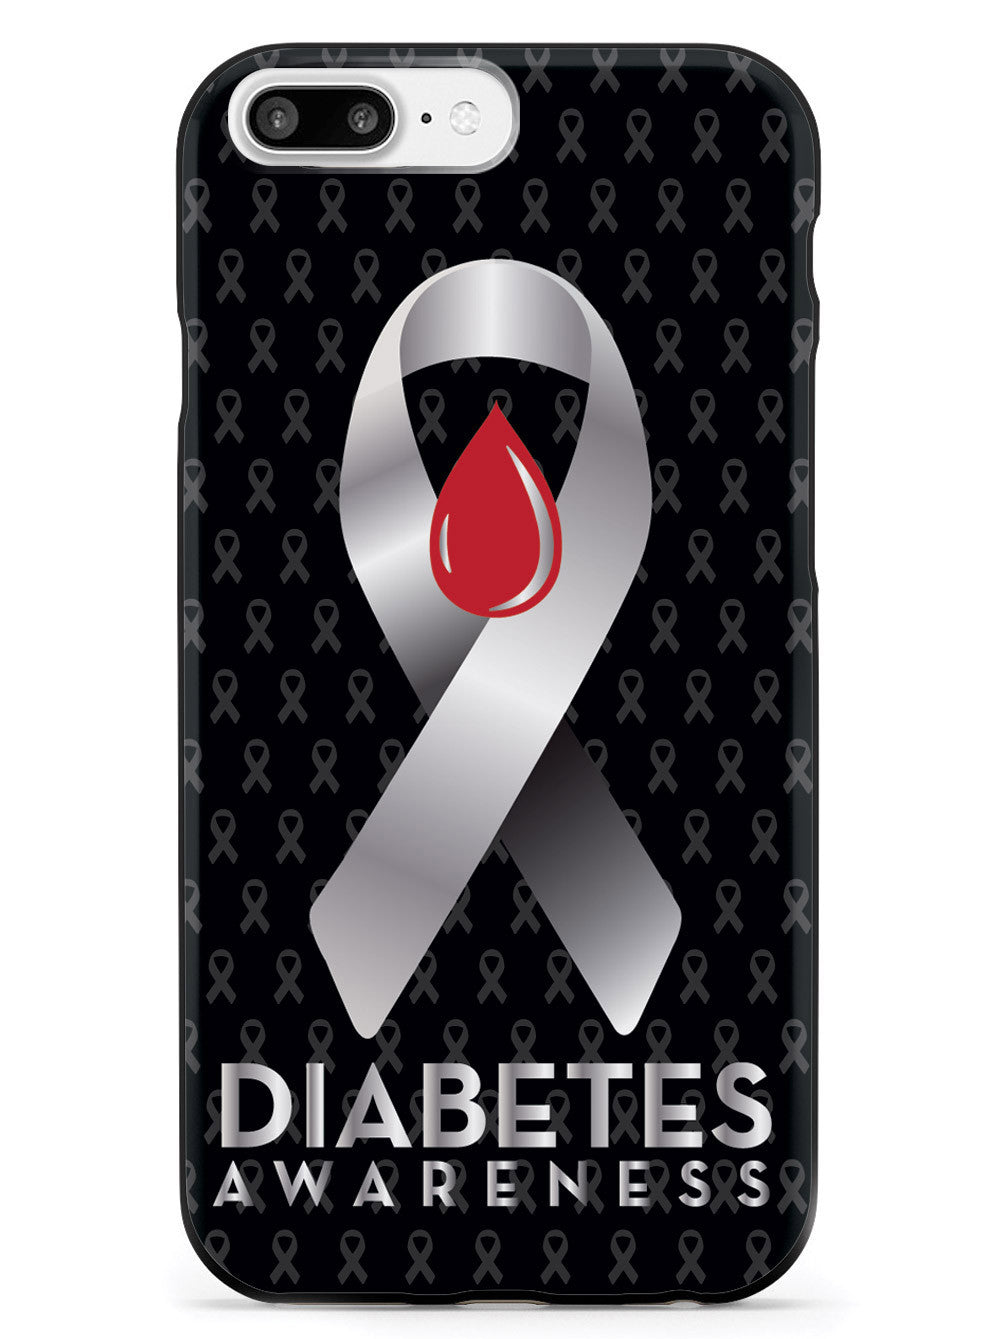 Diabetes Awareness - Black Case